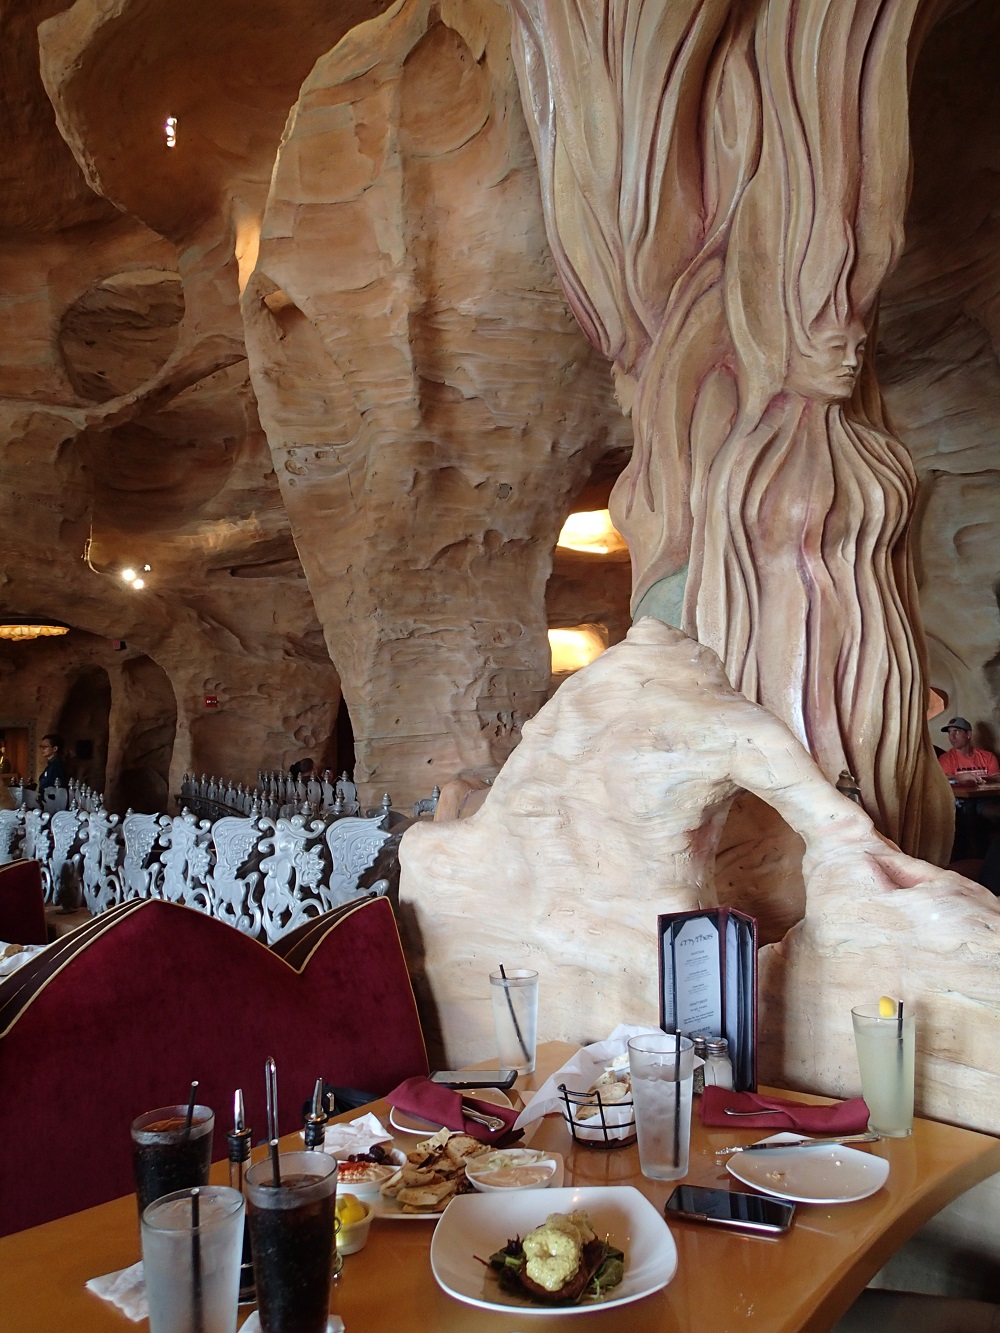 Mythos 餐厅不负世界最佳主题公园餐厅的称号 - 黛布拉·史密斯 (Debra Smith) 摄